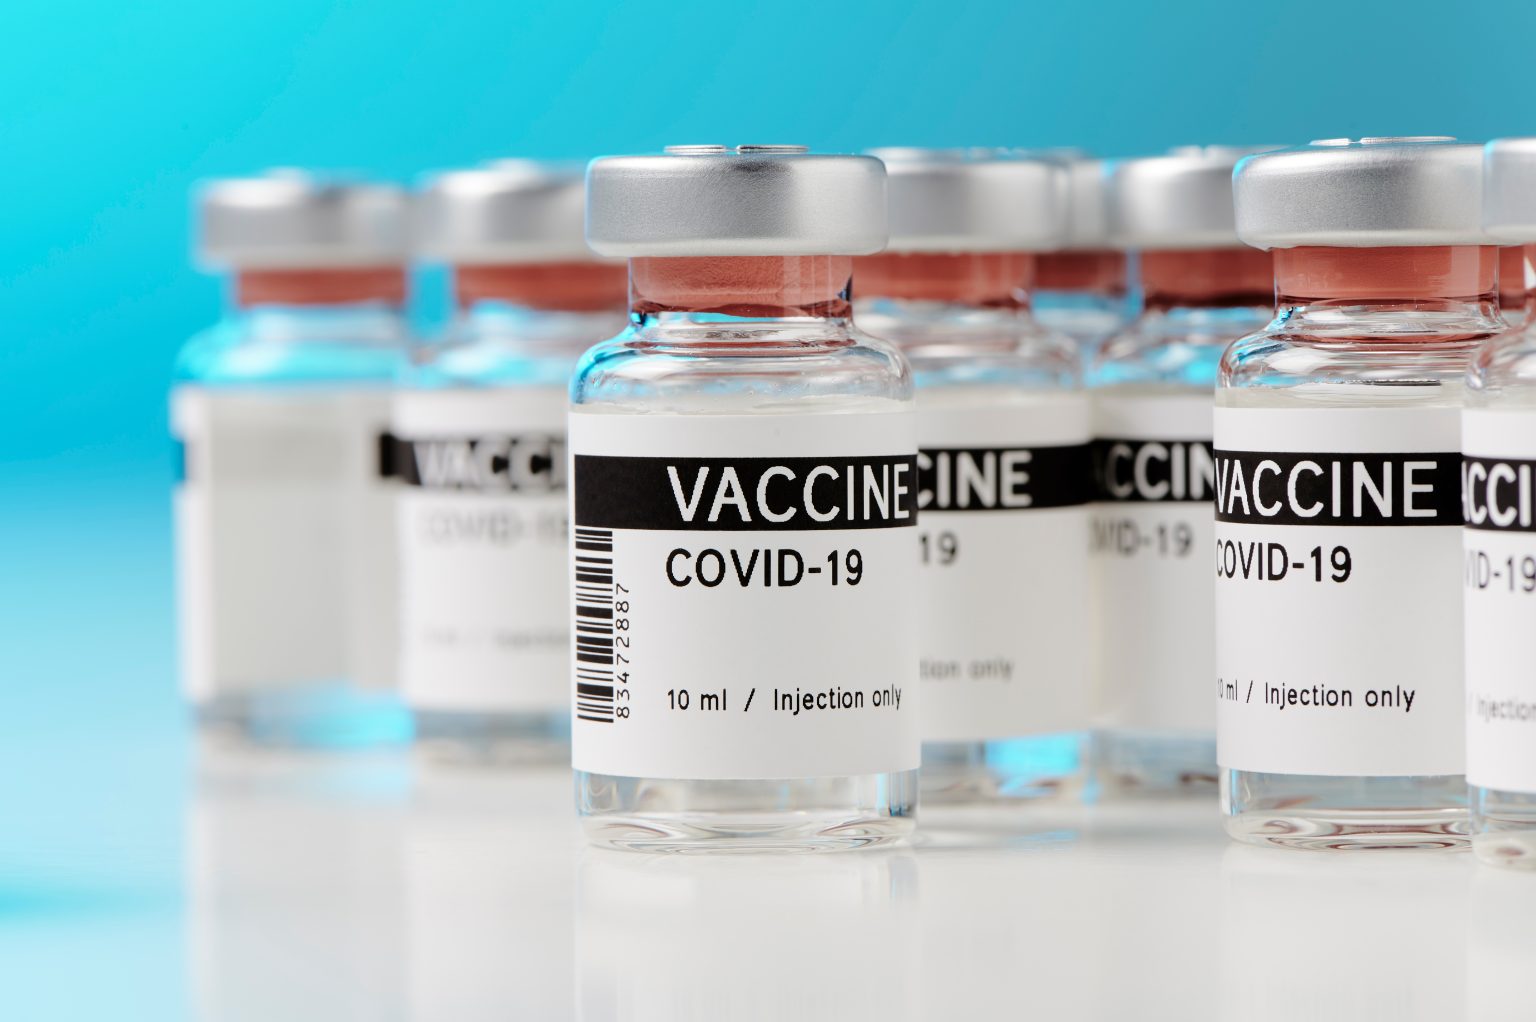 Vaksin moderna dari negara mana